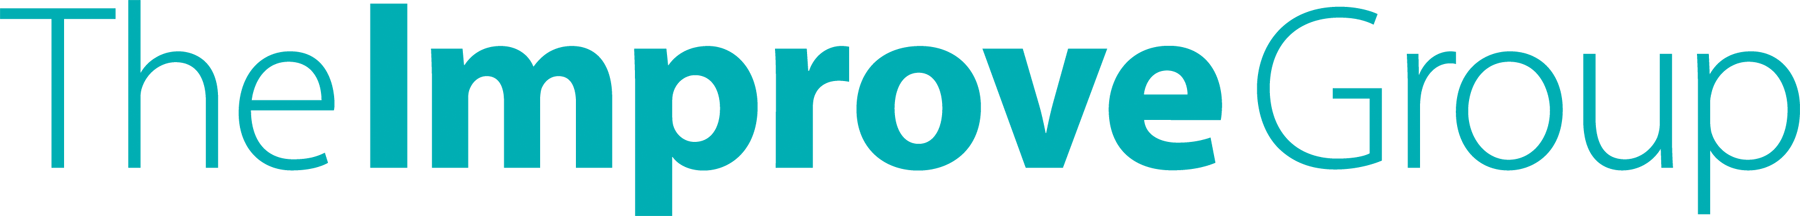 The Improve Group Logo